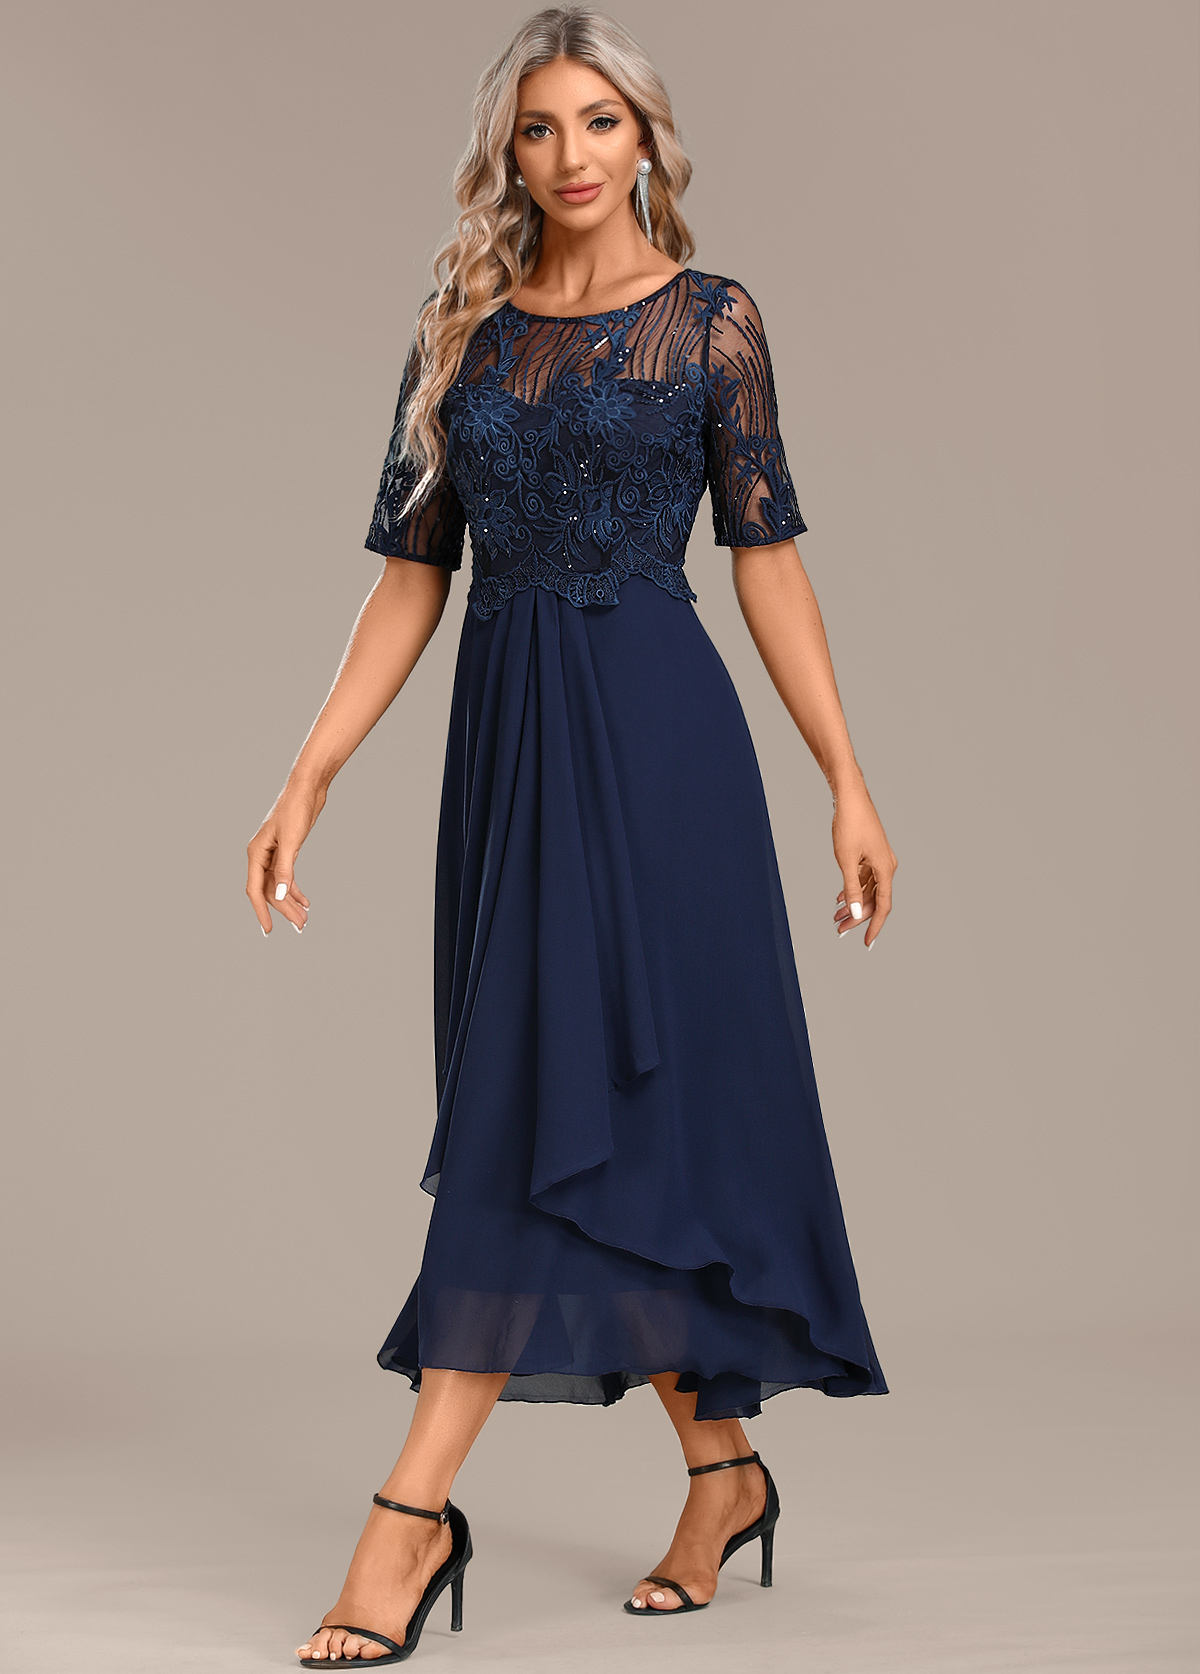 Short Sleeve Lace Navy Round Neck Dress | Rosewe.com - USD $51.98